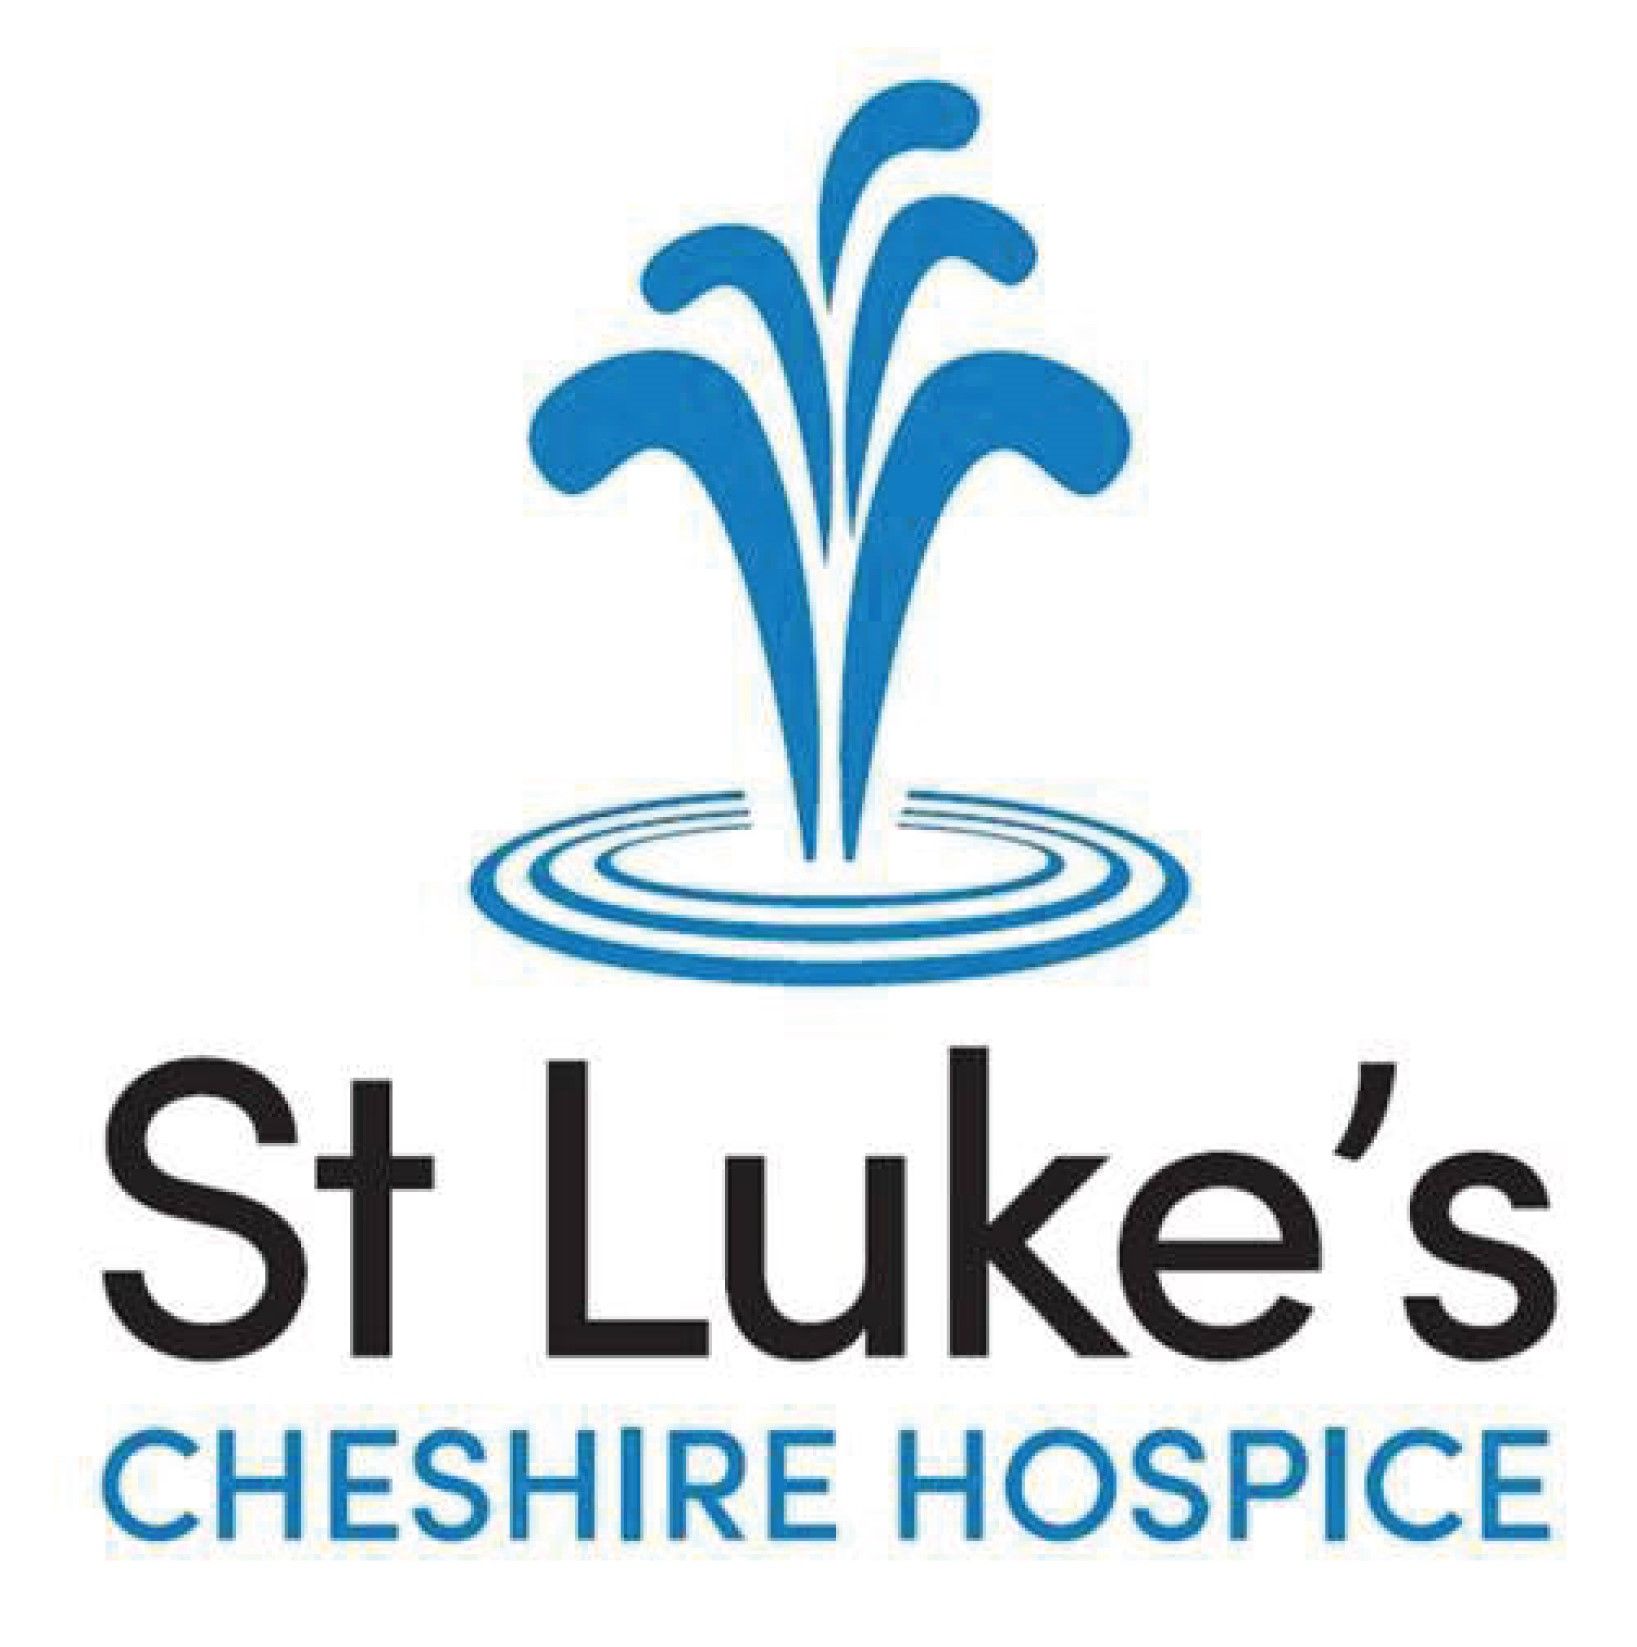 st luke's cheshire hospice square logo